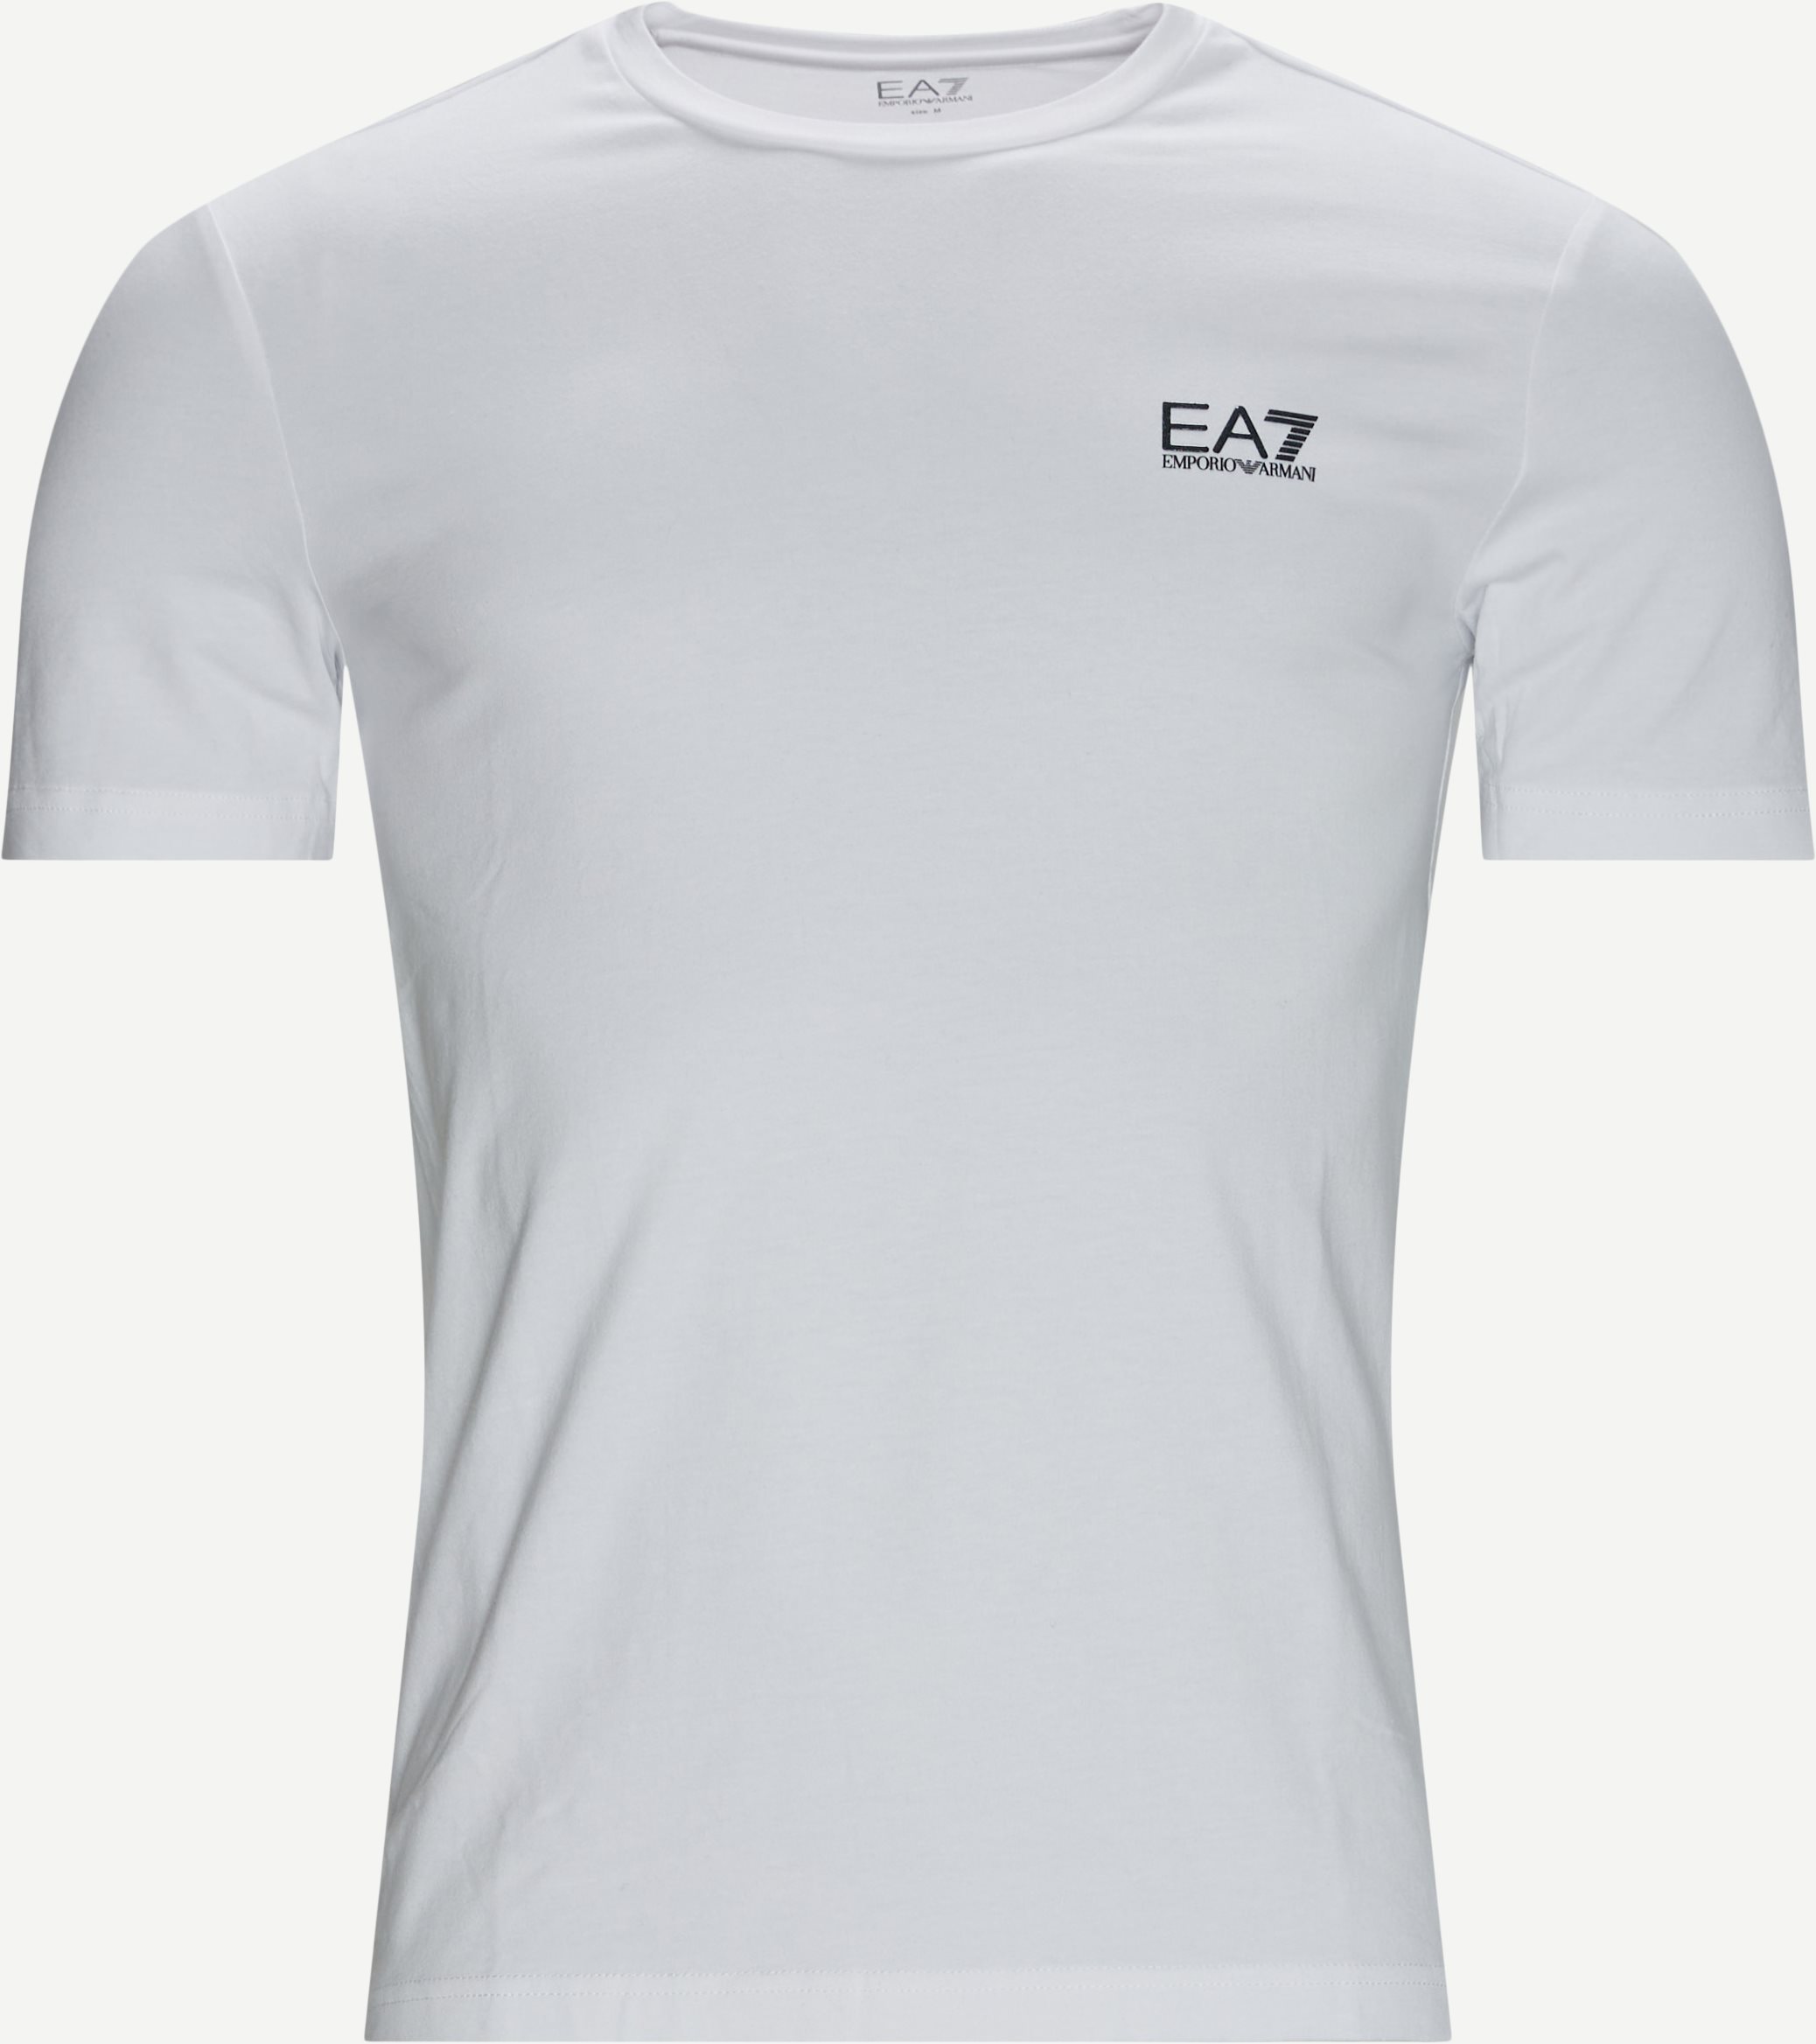 8NPT52 T-shirt - T-shirts - Regular fit - White